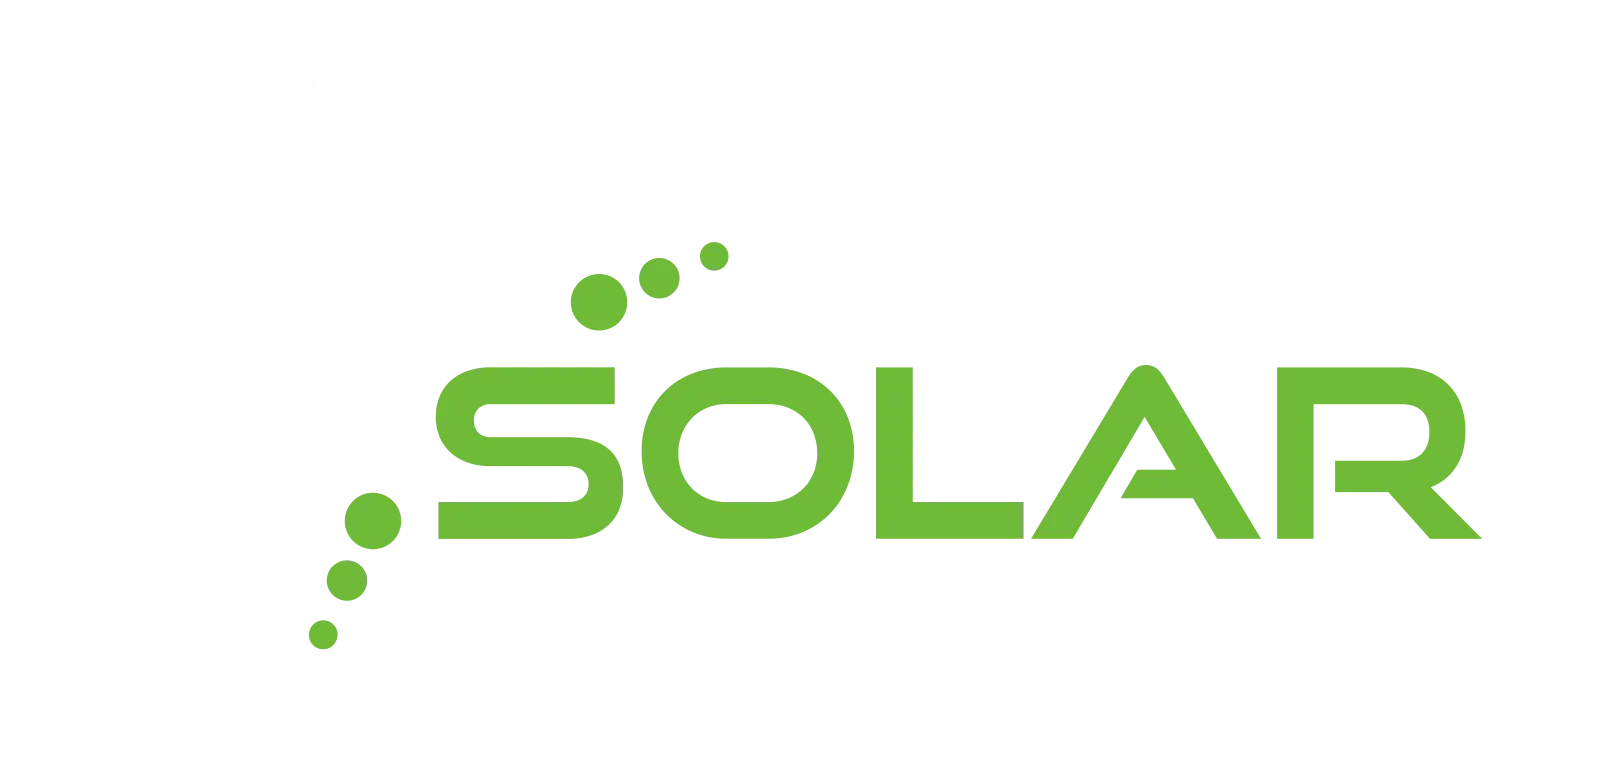 SolarTRONIK-LOGO-Control-Engine-Battery-Power-Converter-Charger-Optimizer-Maintainer-electronic-Revtronik